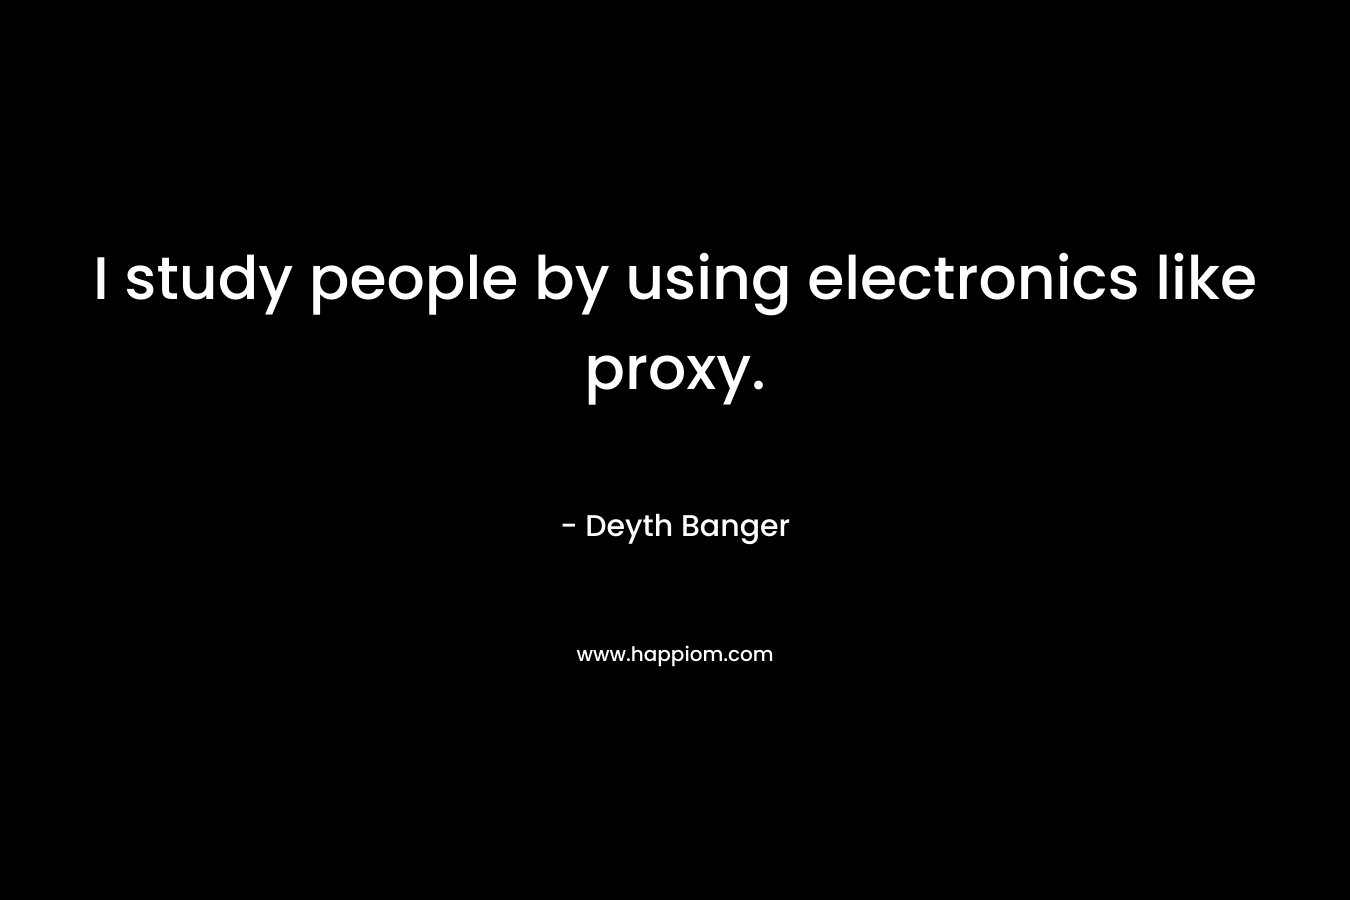 I study people by using electronics like proxy.